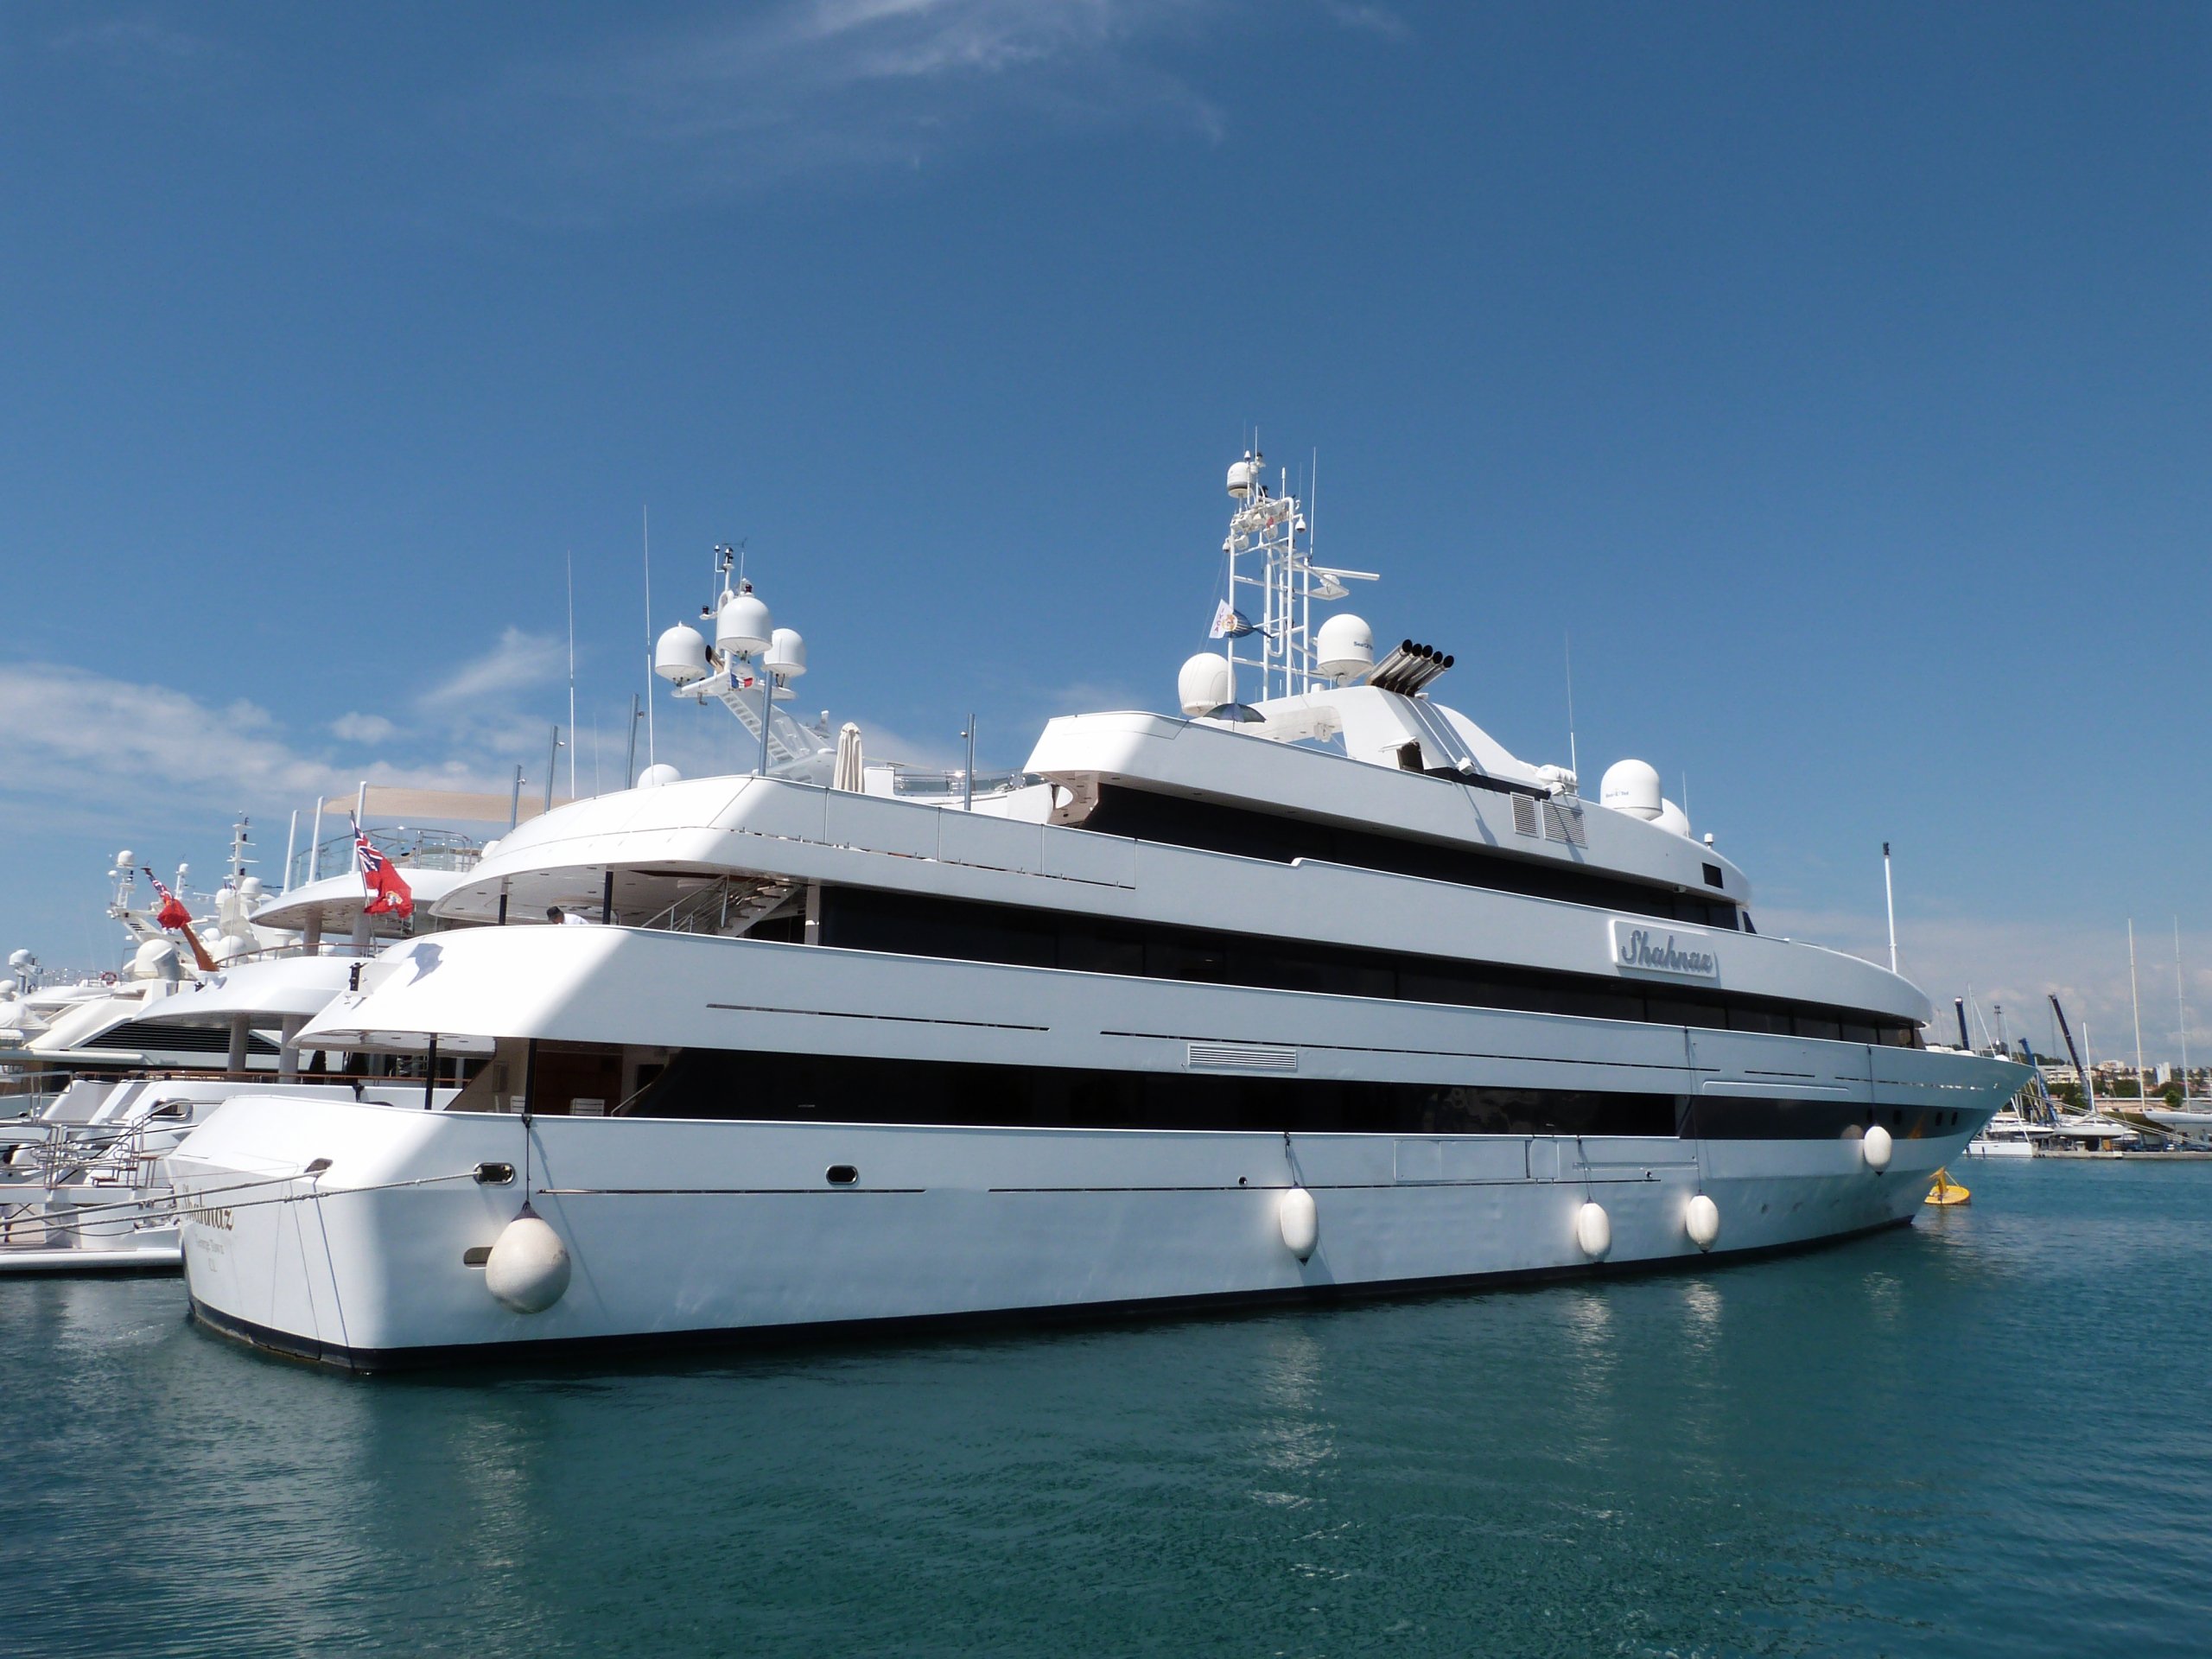 SHAHNAZ Yacht • Waleed bin Ibrahim $40M Superyacht • Nuovi Cantieri Liguri • 1991